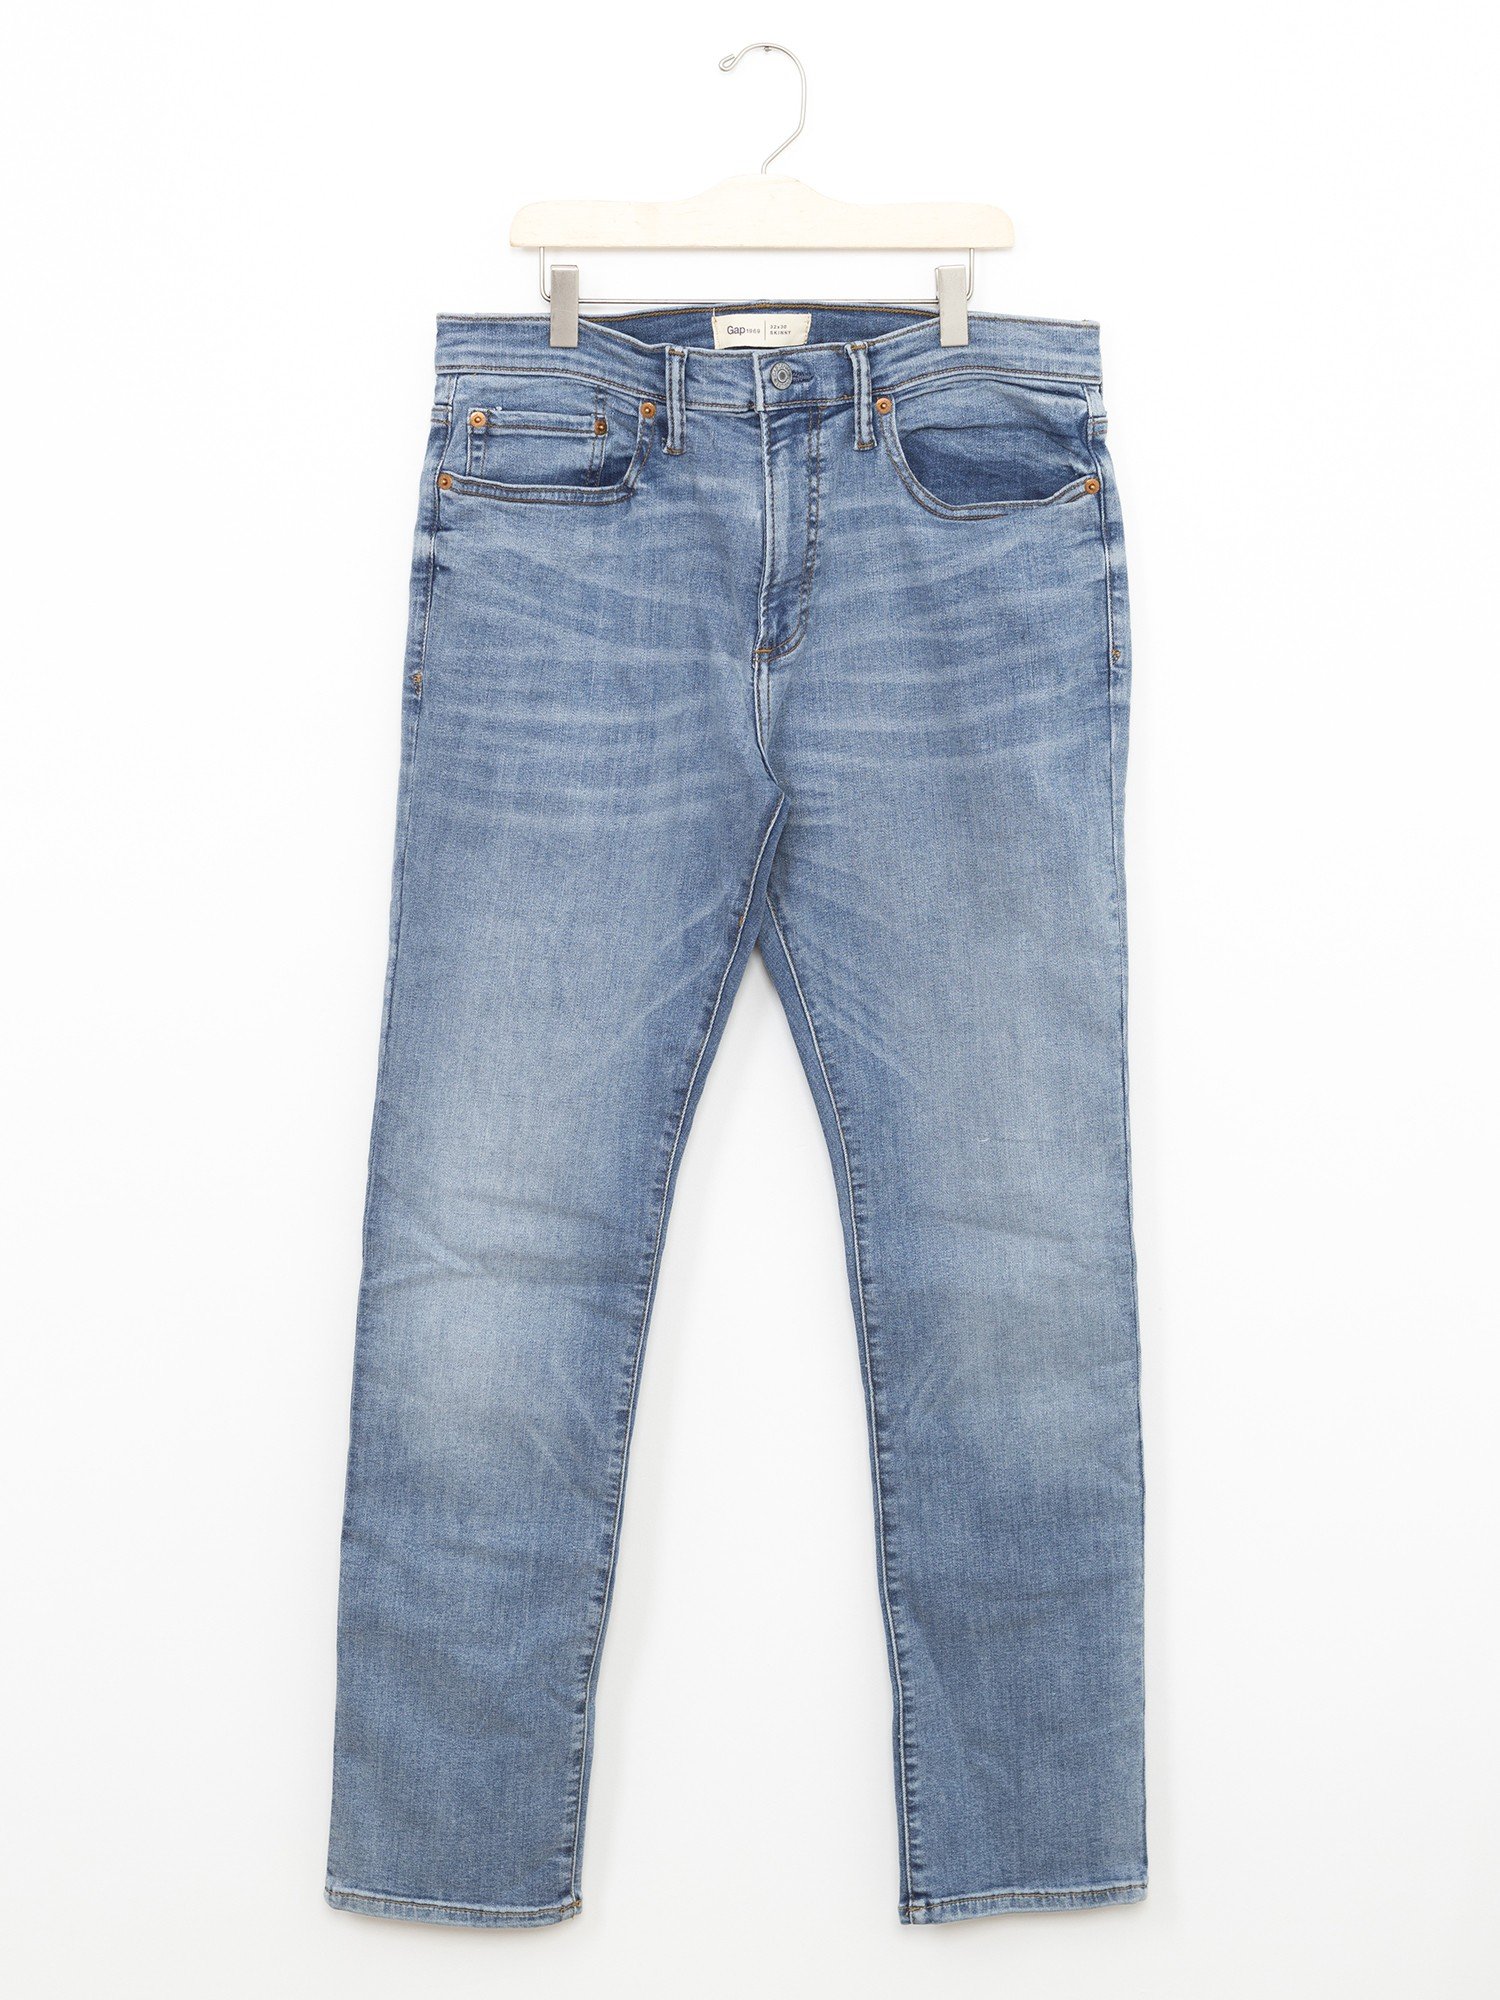 Skinny fit jean pantolon product image